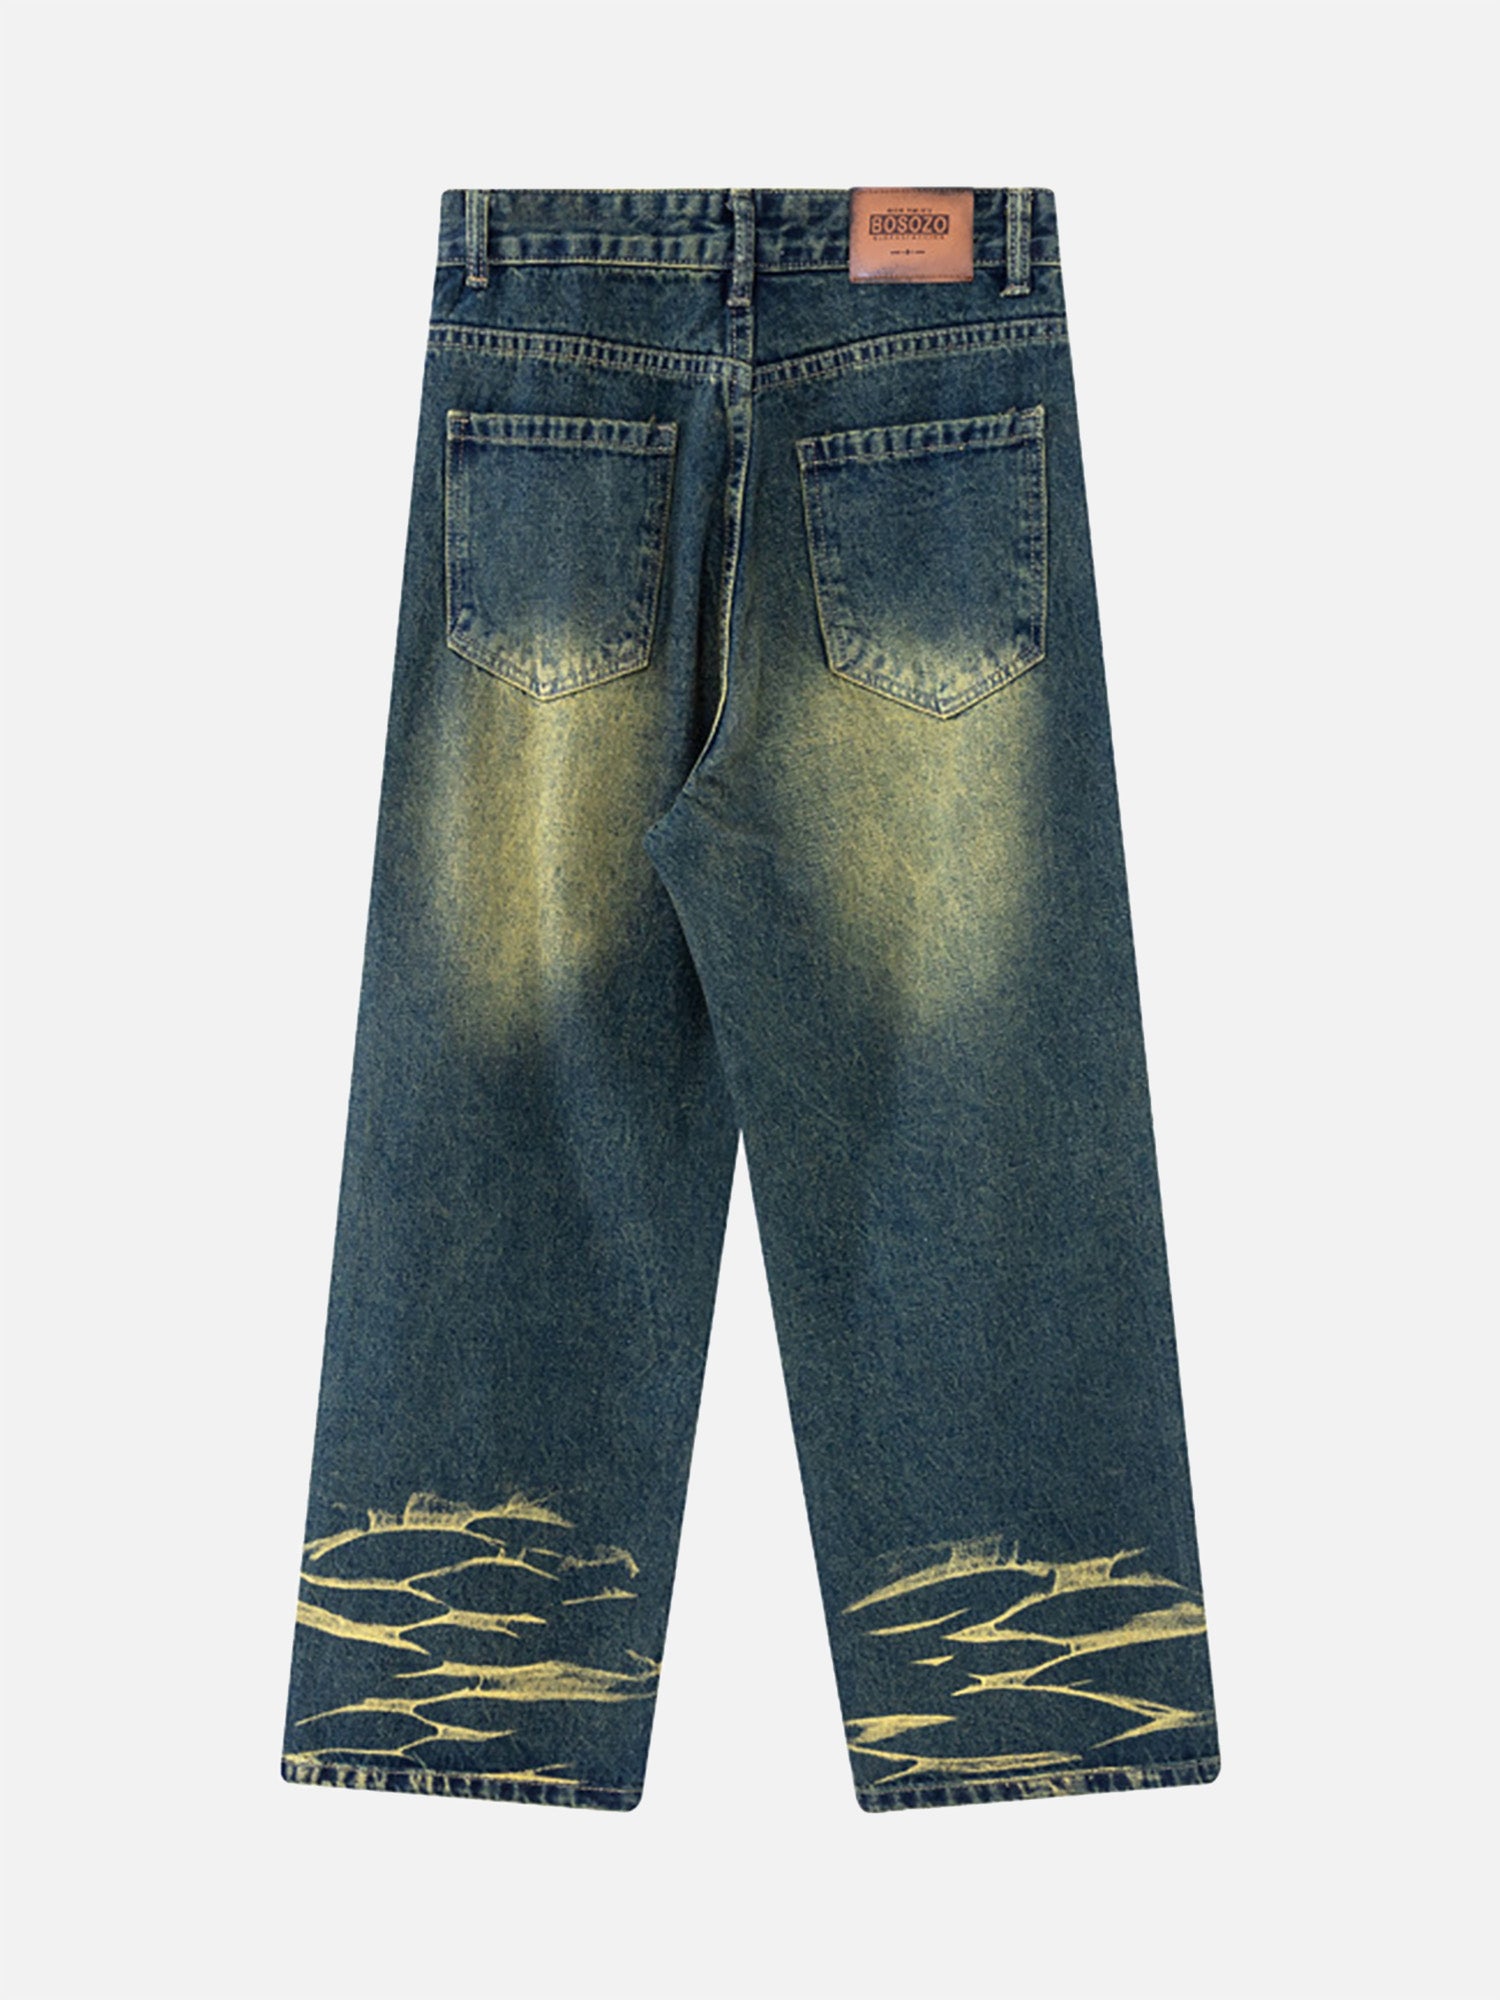 American High Street Retro Distressed Pattern Design Niche Jeans